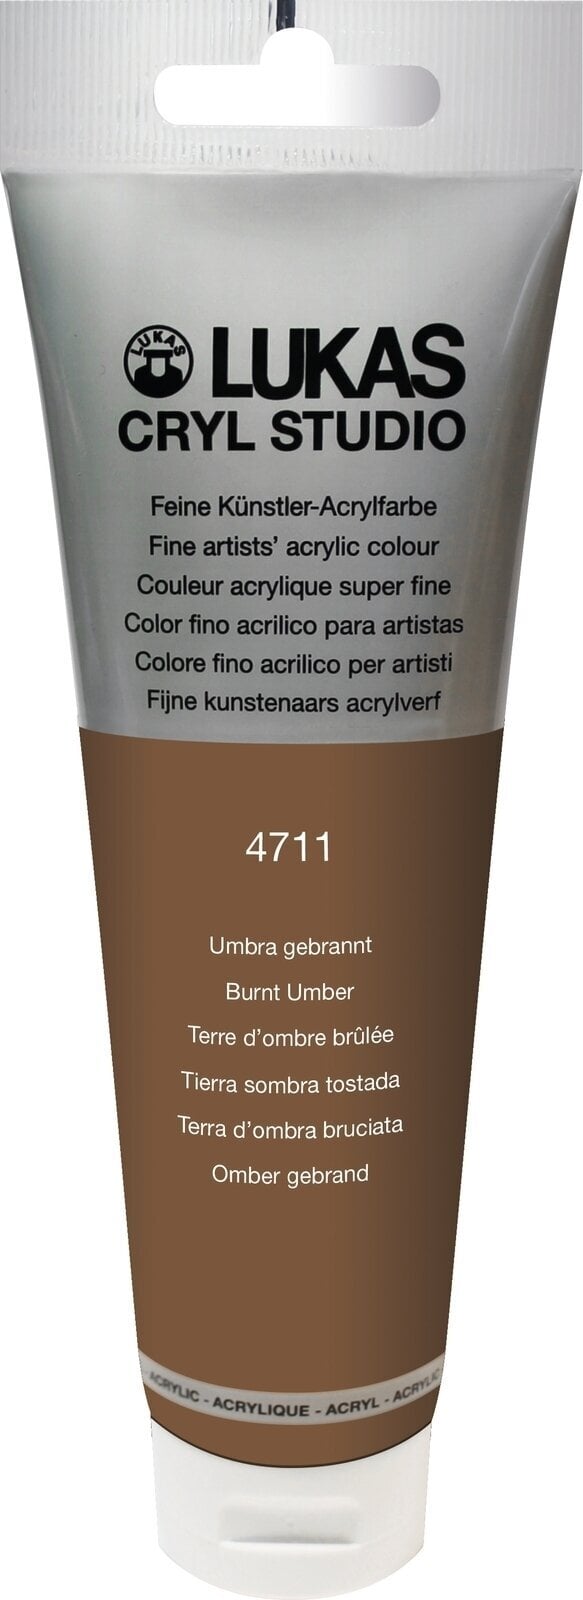 Akrylová farba Lukas Cryl Studio Acrylic Paint Plastic Tube Akrylová farba Burnt Umber 125 ml 1 ks